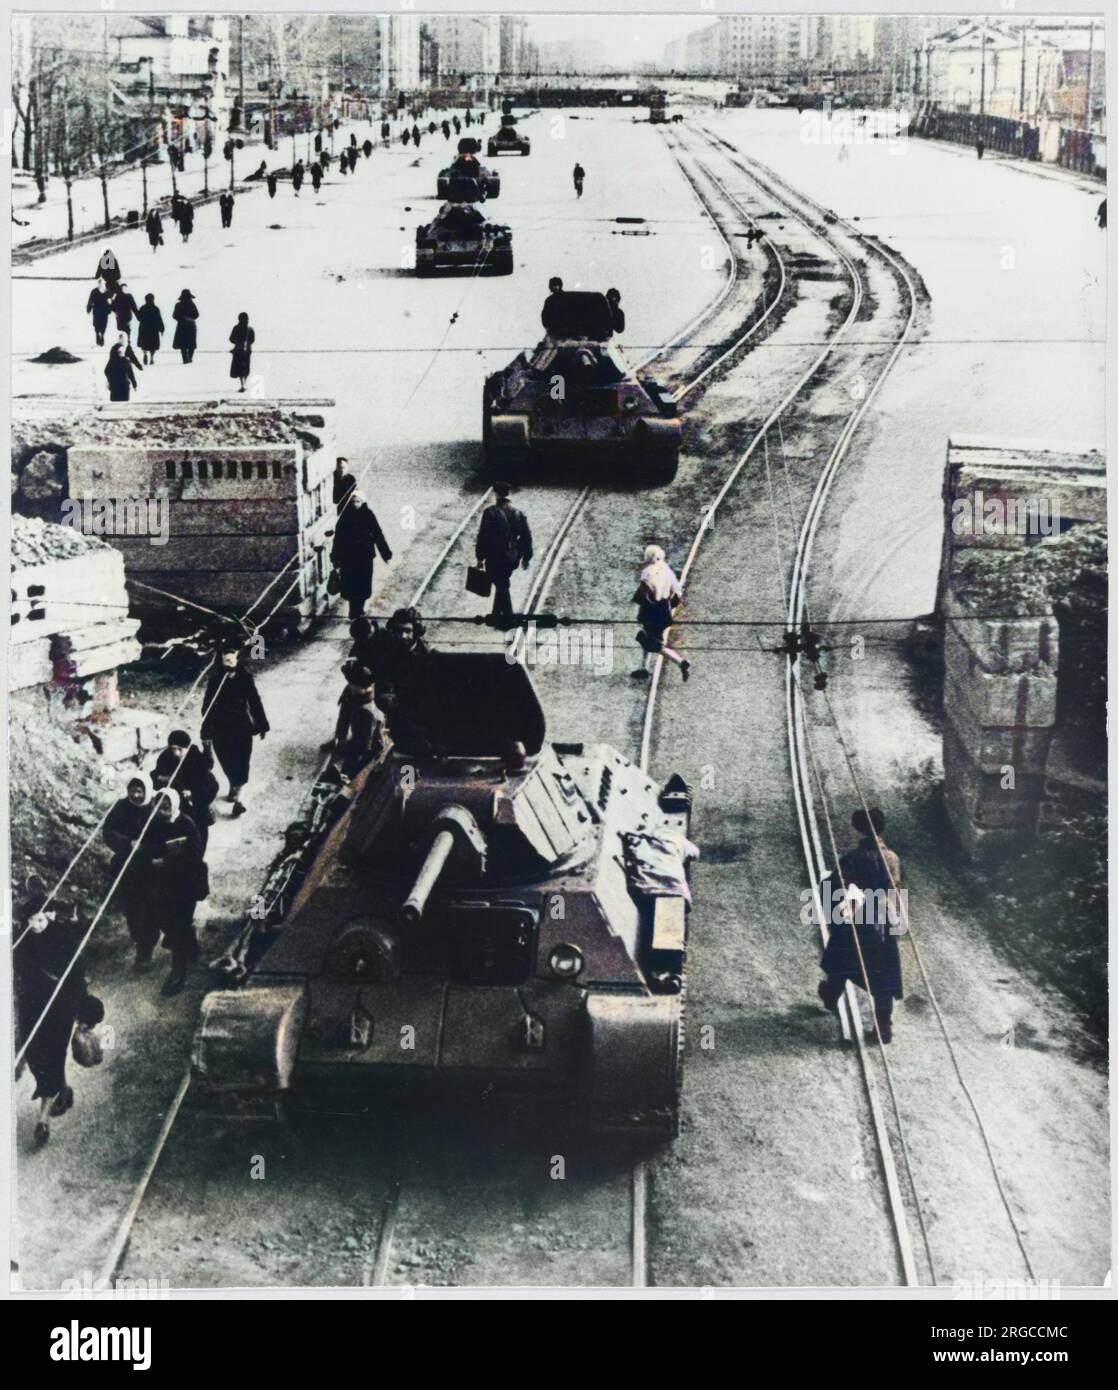 Tanks advance to battle positions along a city street. Stock Photo